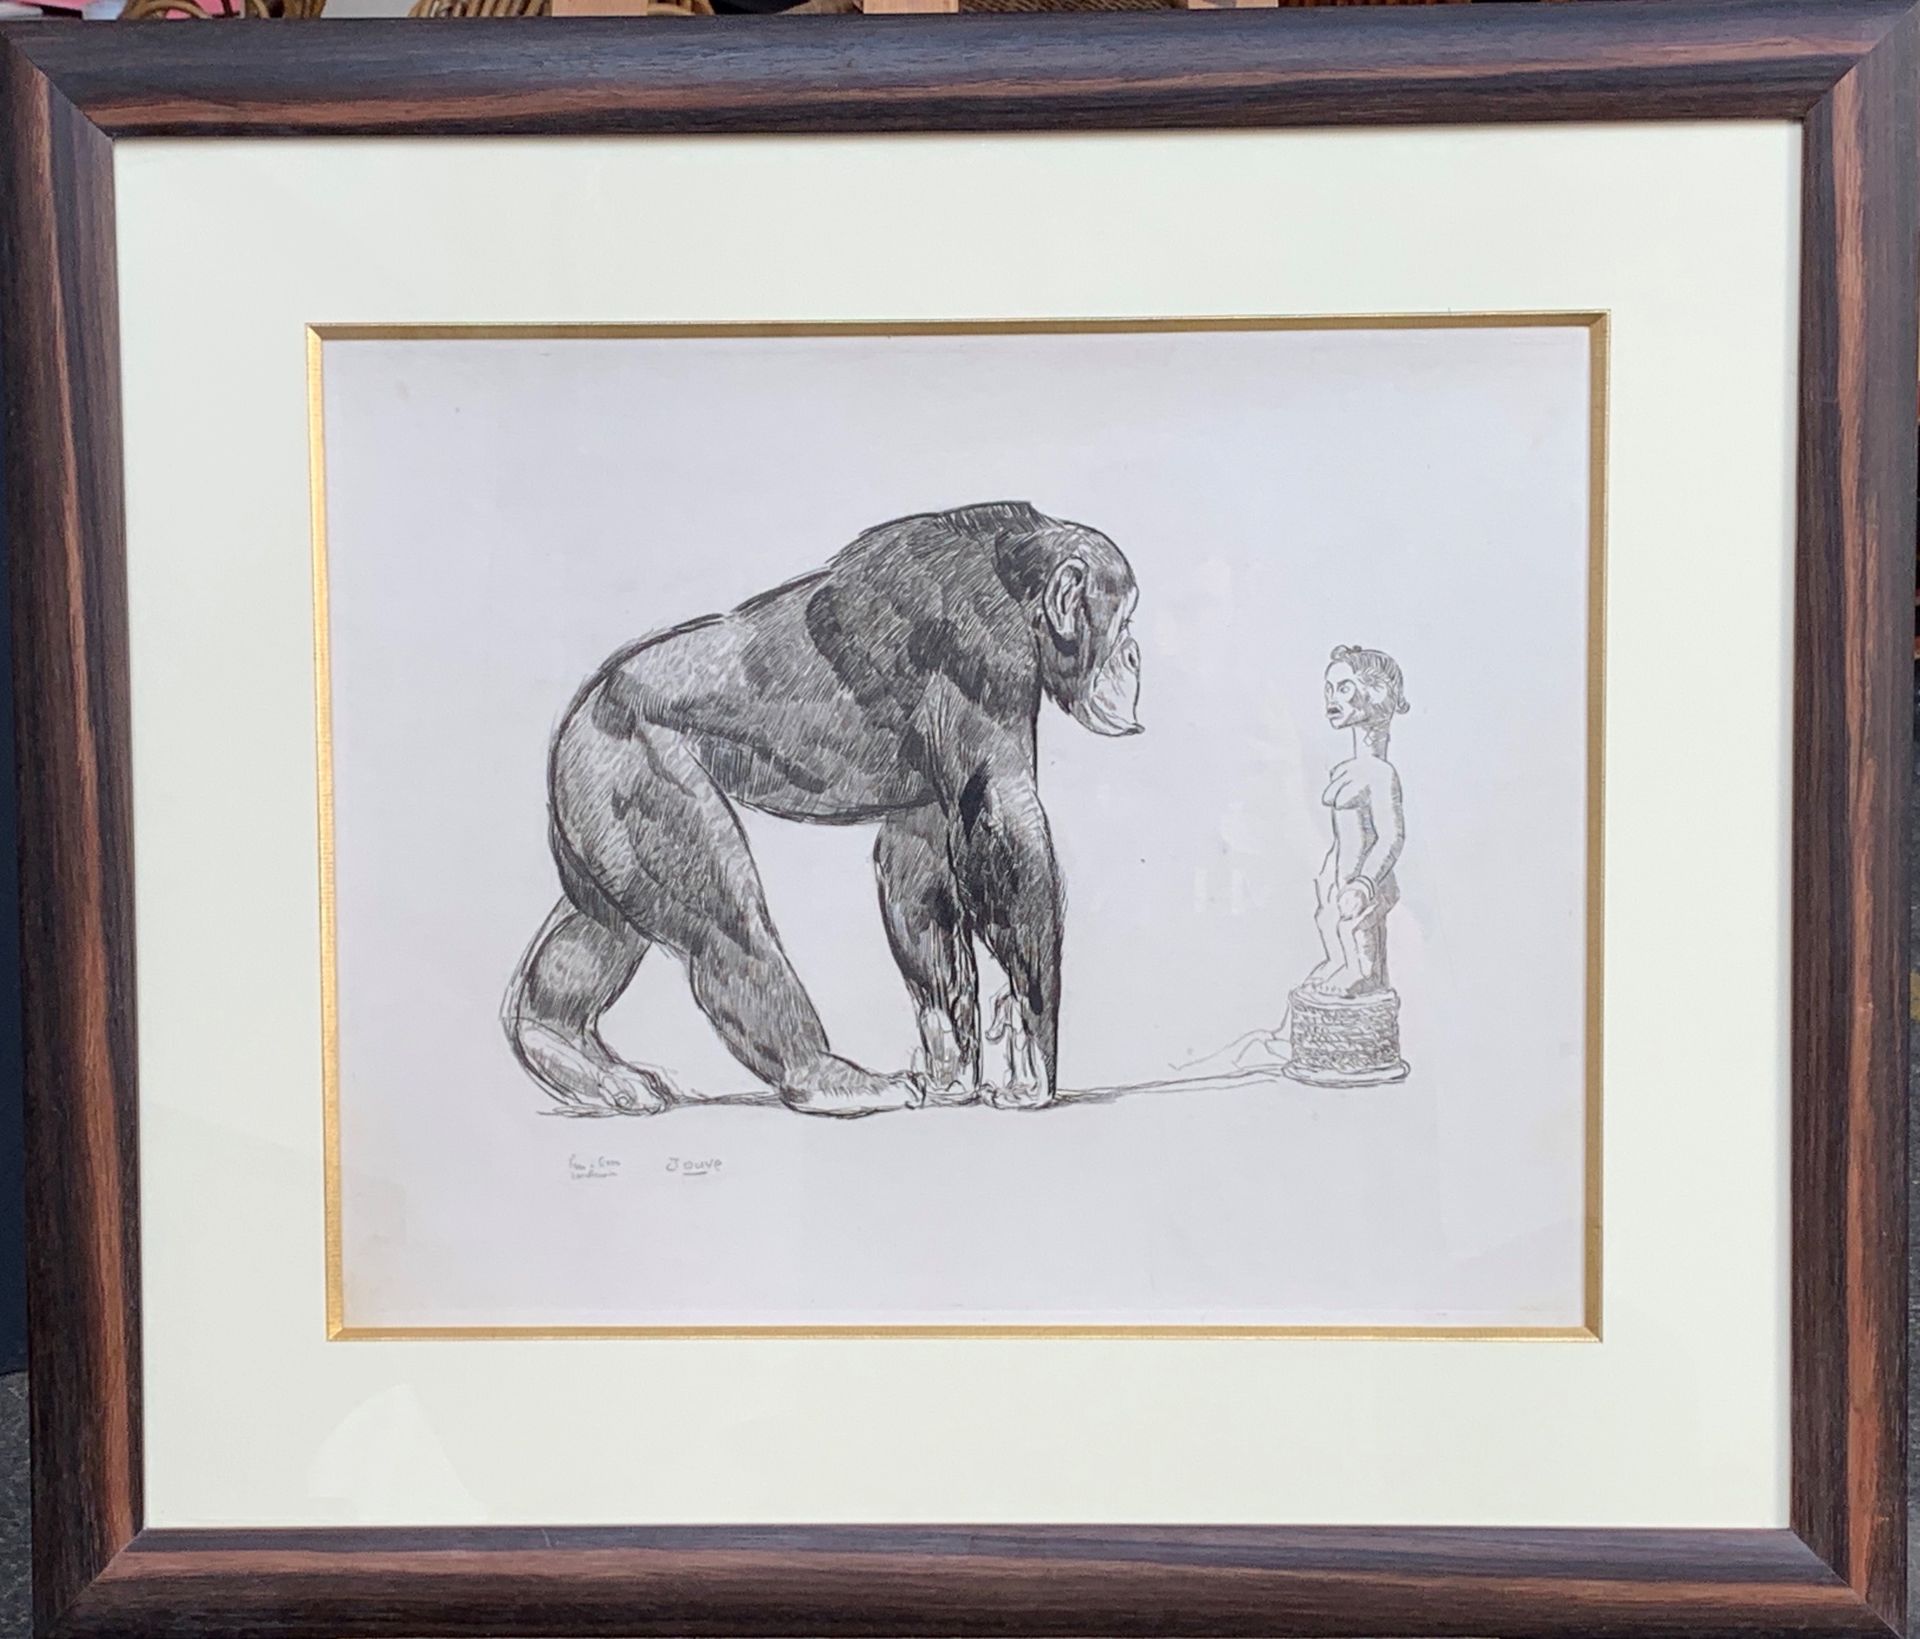 Paul JOUVE (1878-1973) Schimpanse und Baoulé-Statue, 1931

Radierung auf Pergame&hellip;